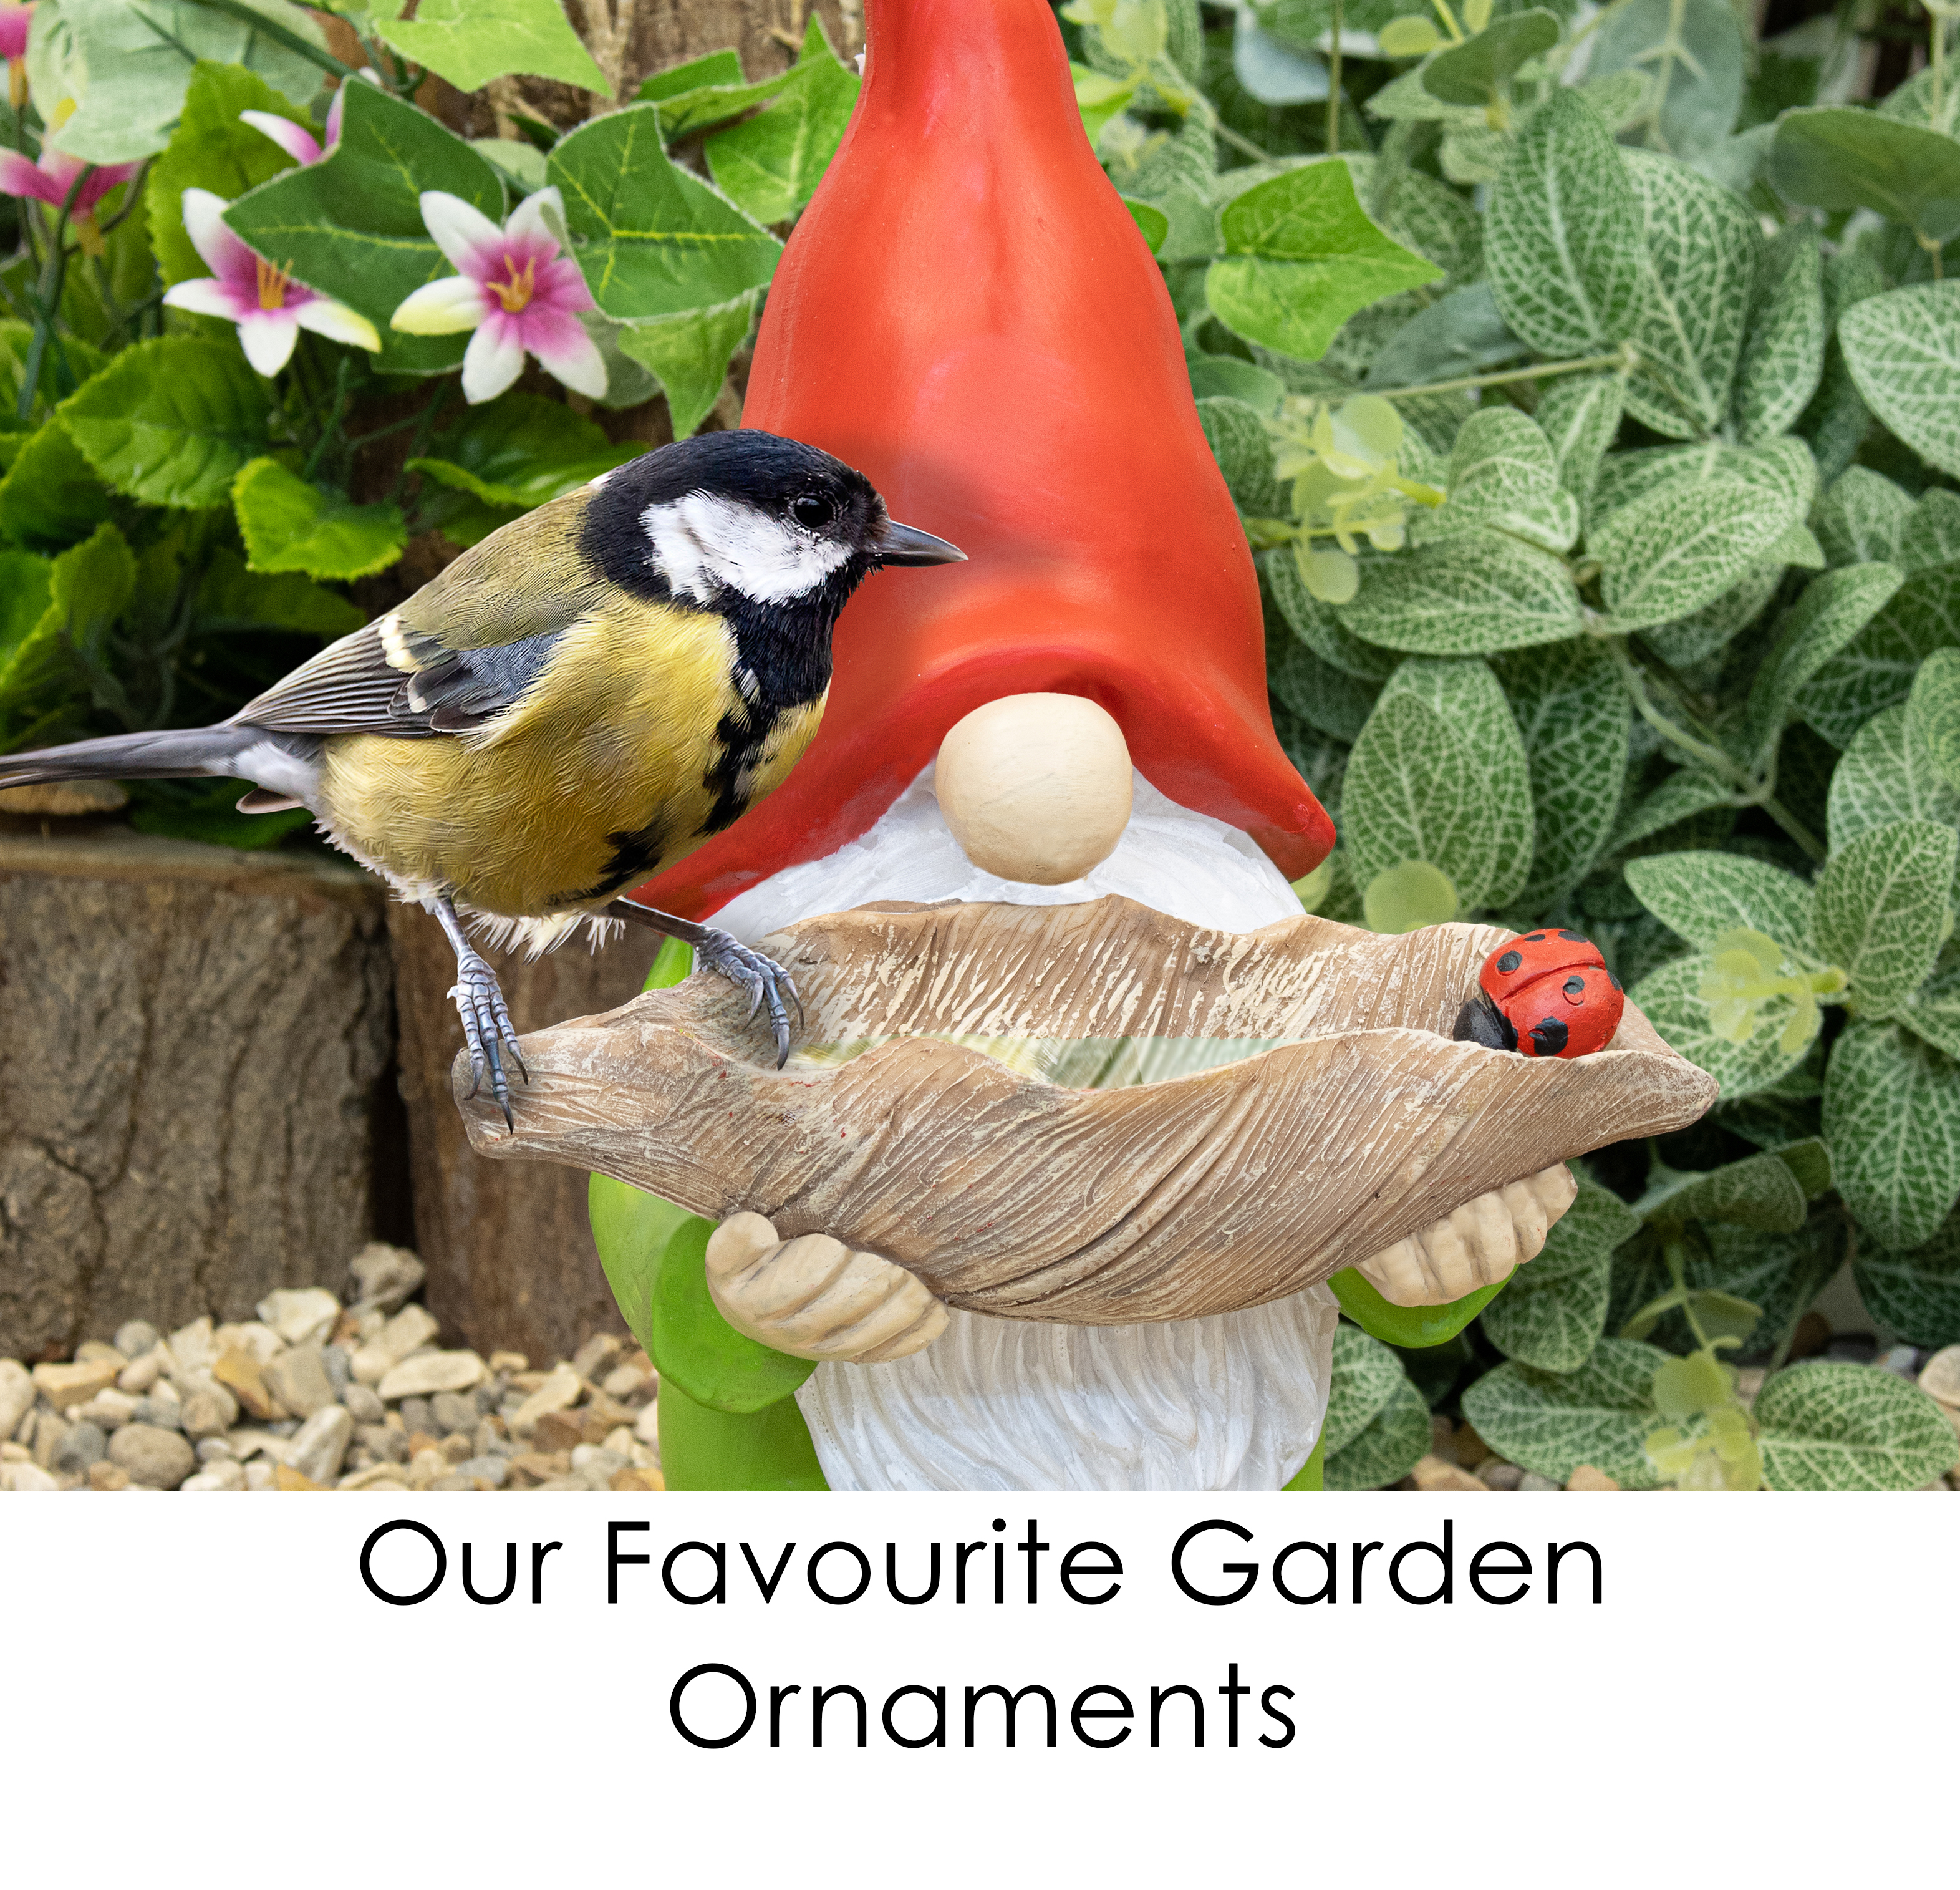 Our Favourite Garden Ornaments